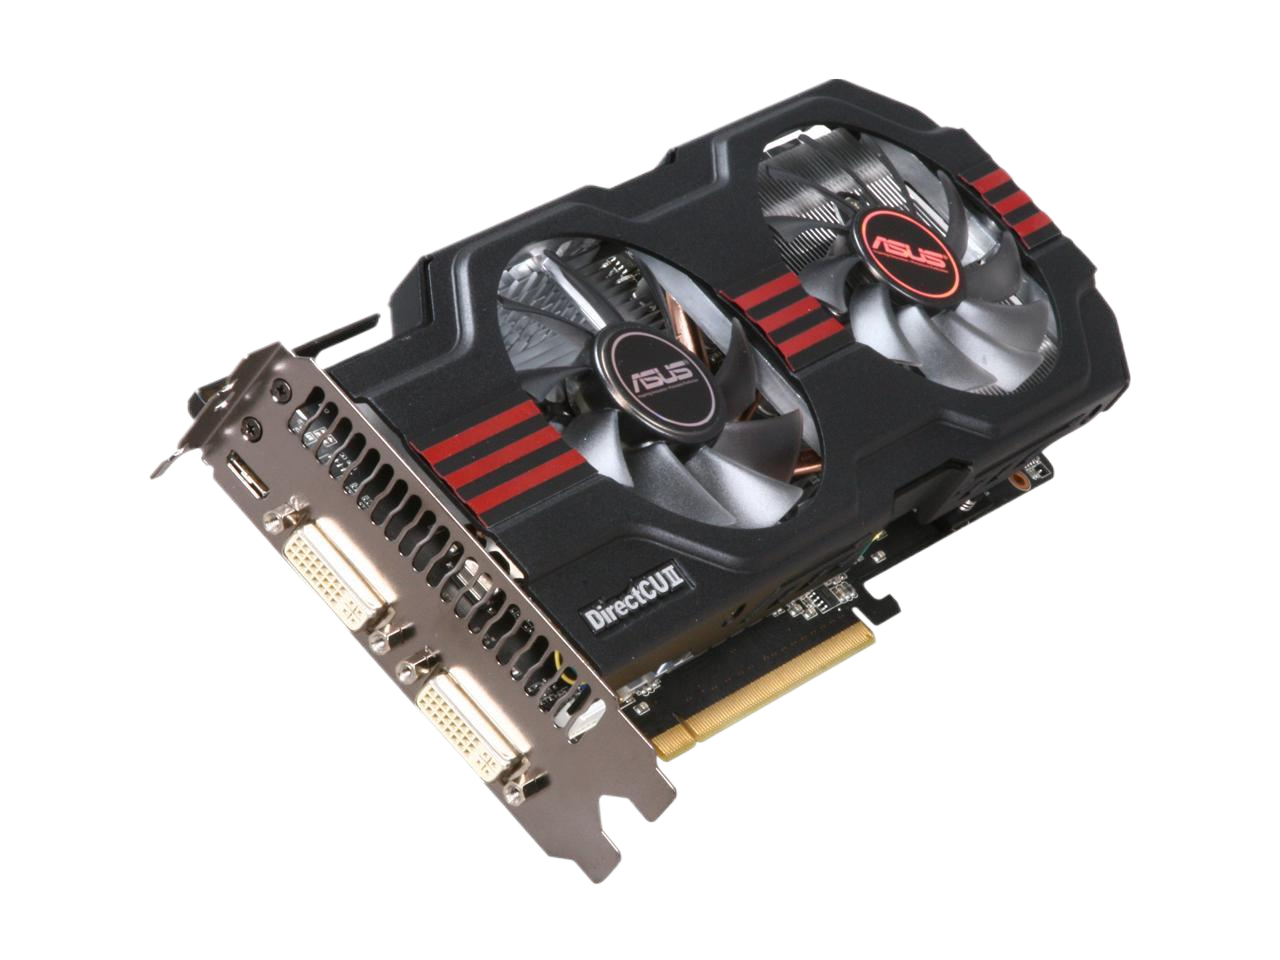 ASUS GeForce GTX 560 1GB GDDR5 256-bit PCI Express 2.0 x16 HDCP Ready SLI Support Video Card ENGTX560 DCII TOP/2DI/1GD5